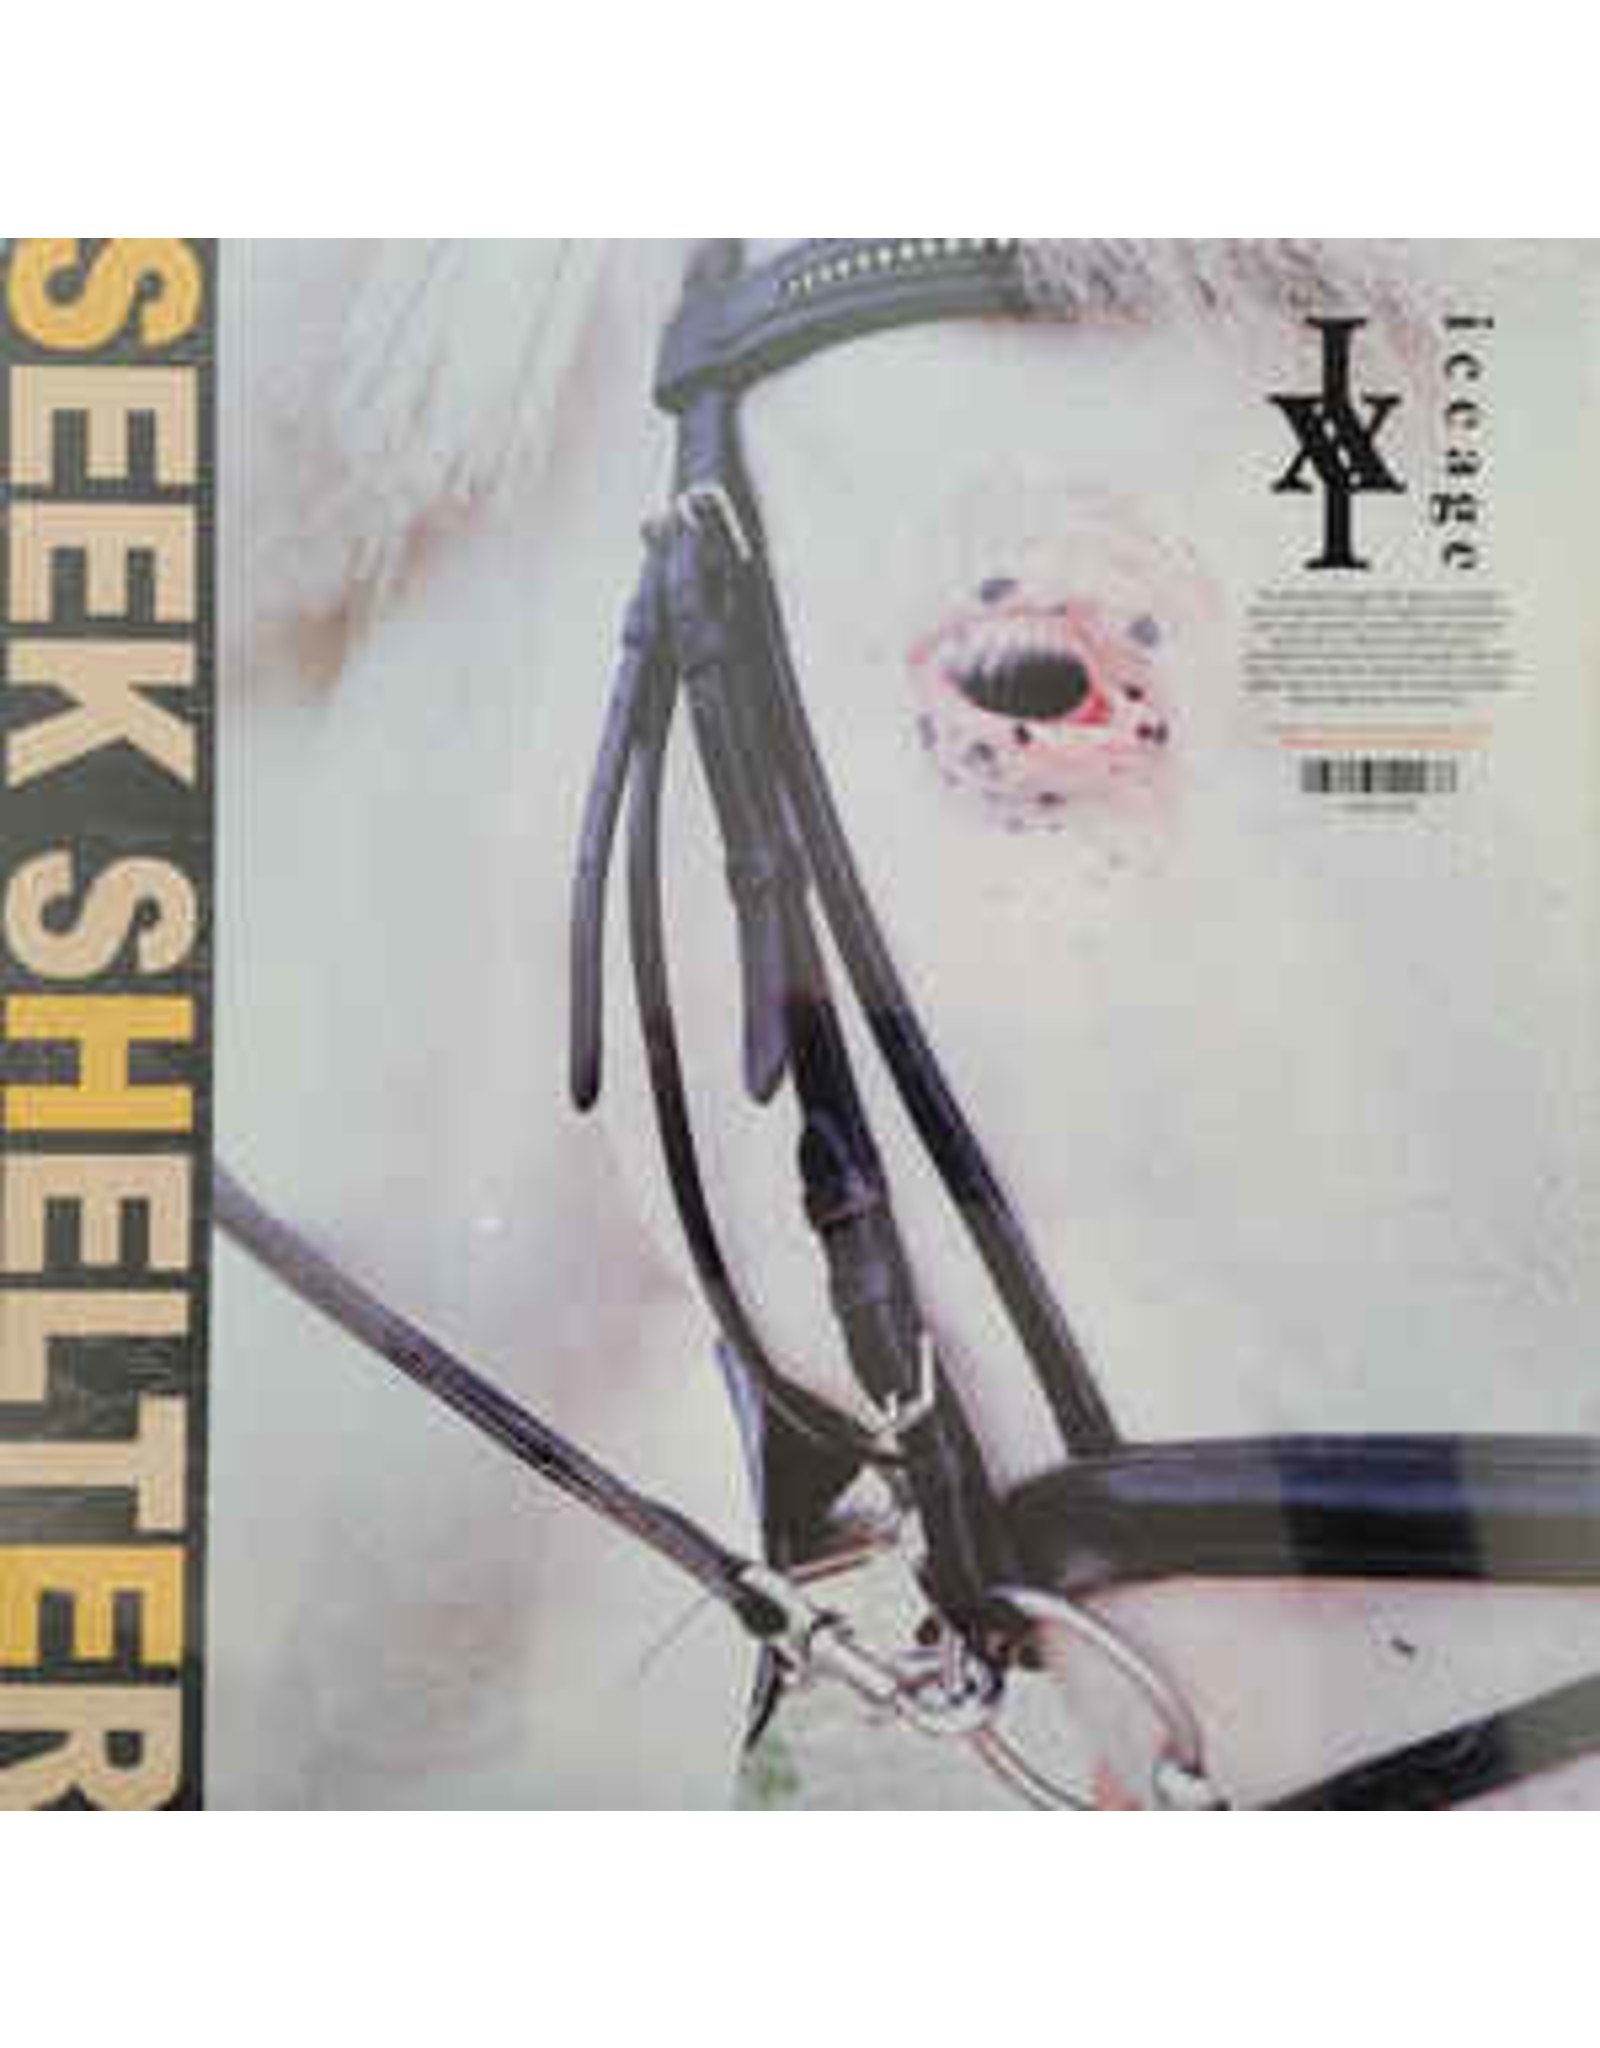 Iceage / Seek Shelter (Orange Vinyl)